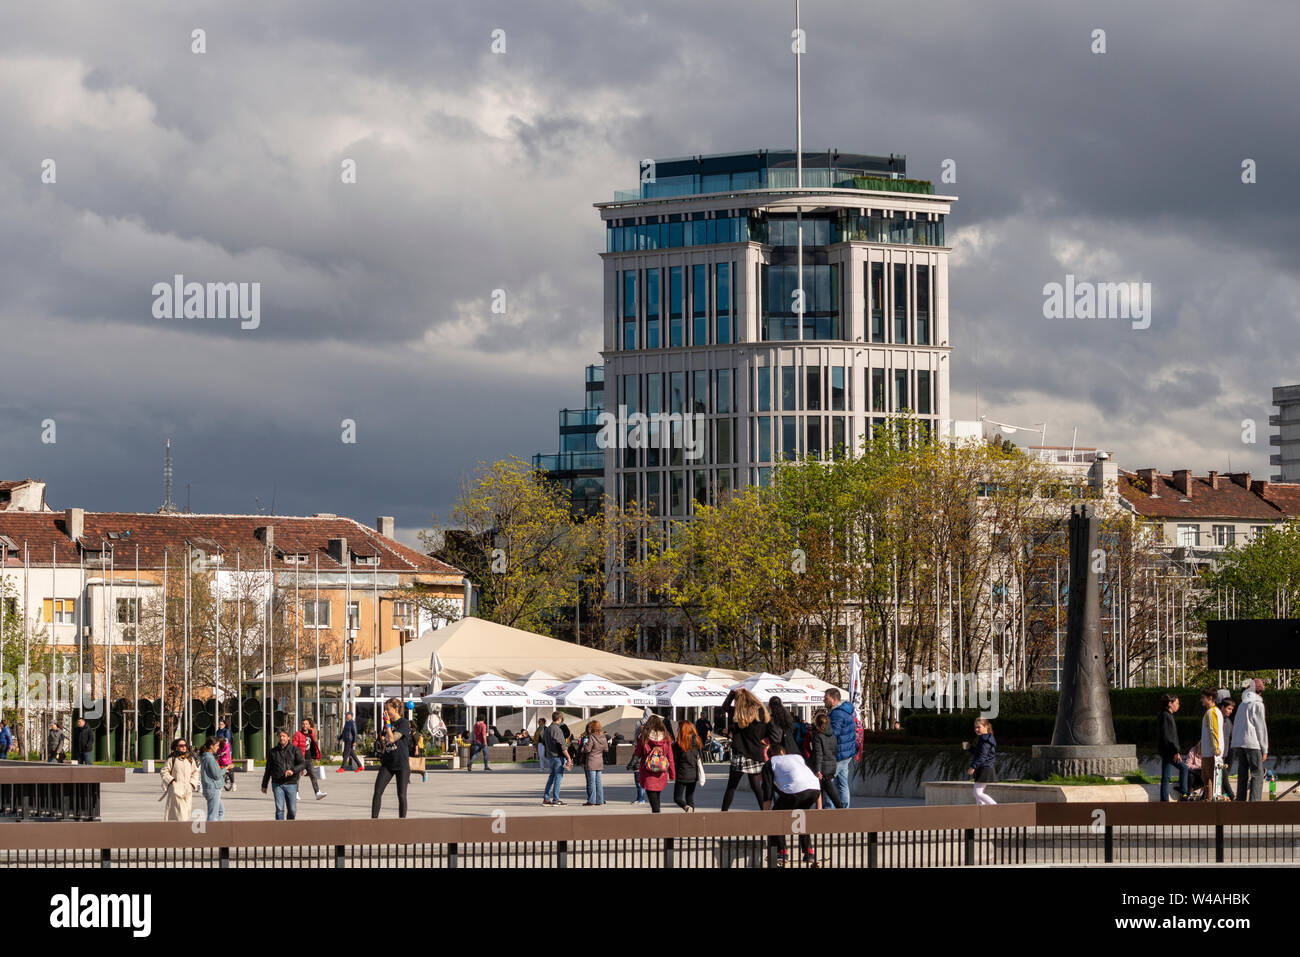 Sofia Bulgarien Innenstadt Stadtpark und Menschen, Osteuropa, Balkan, EU Stockfoto